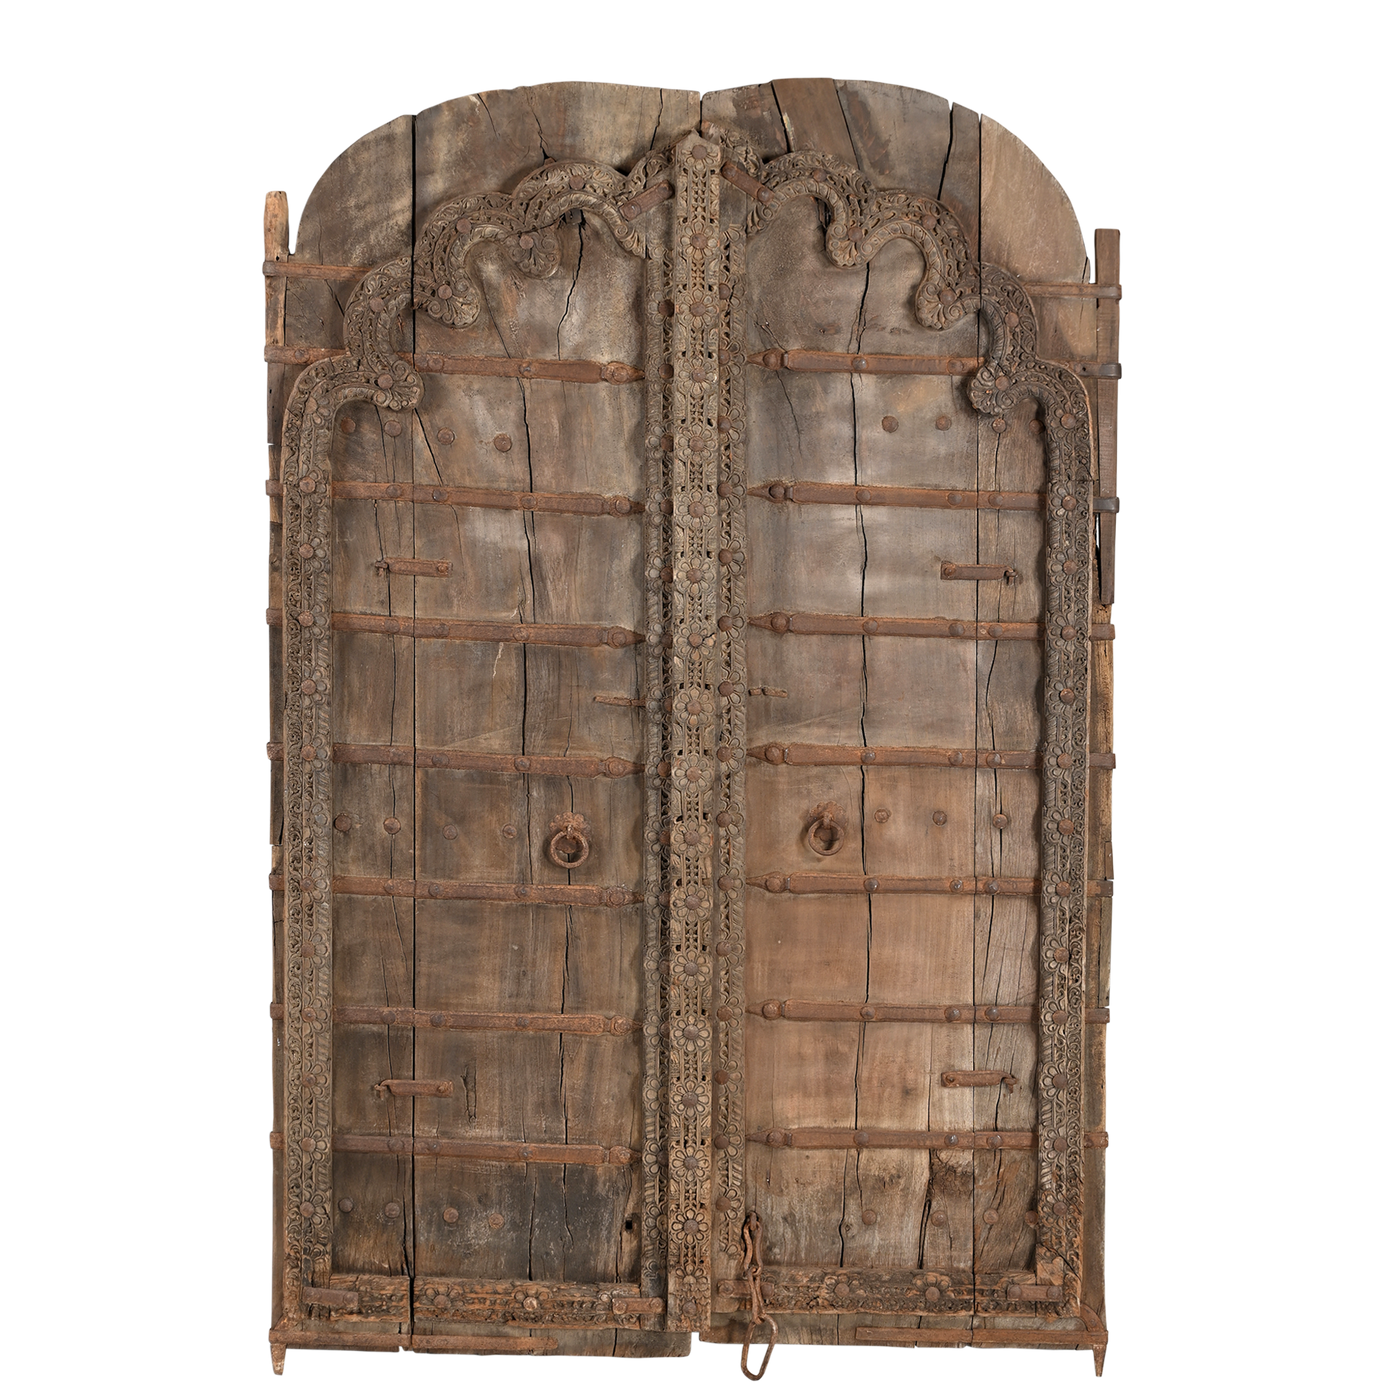 Raobika - Ancient Indian door n°2